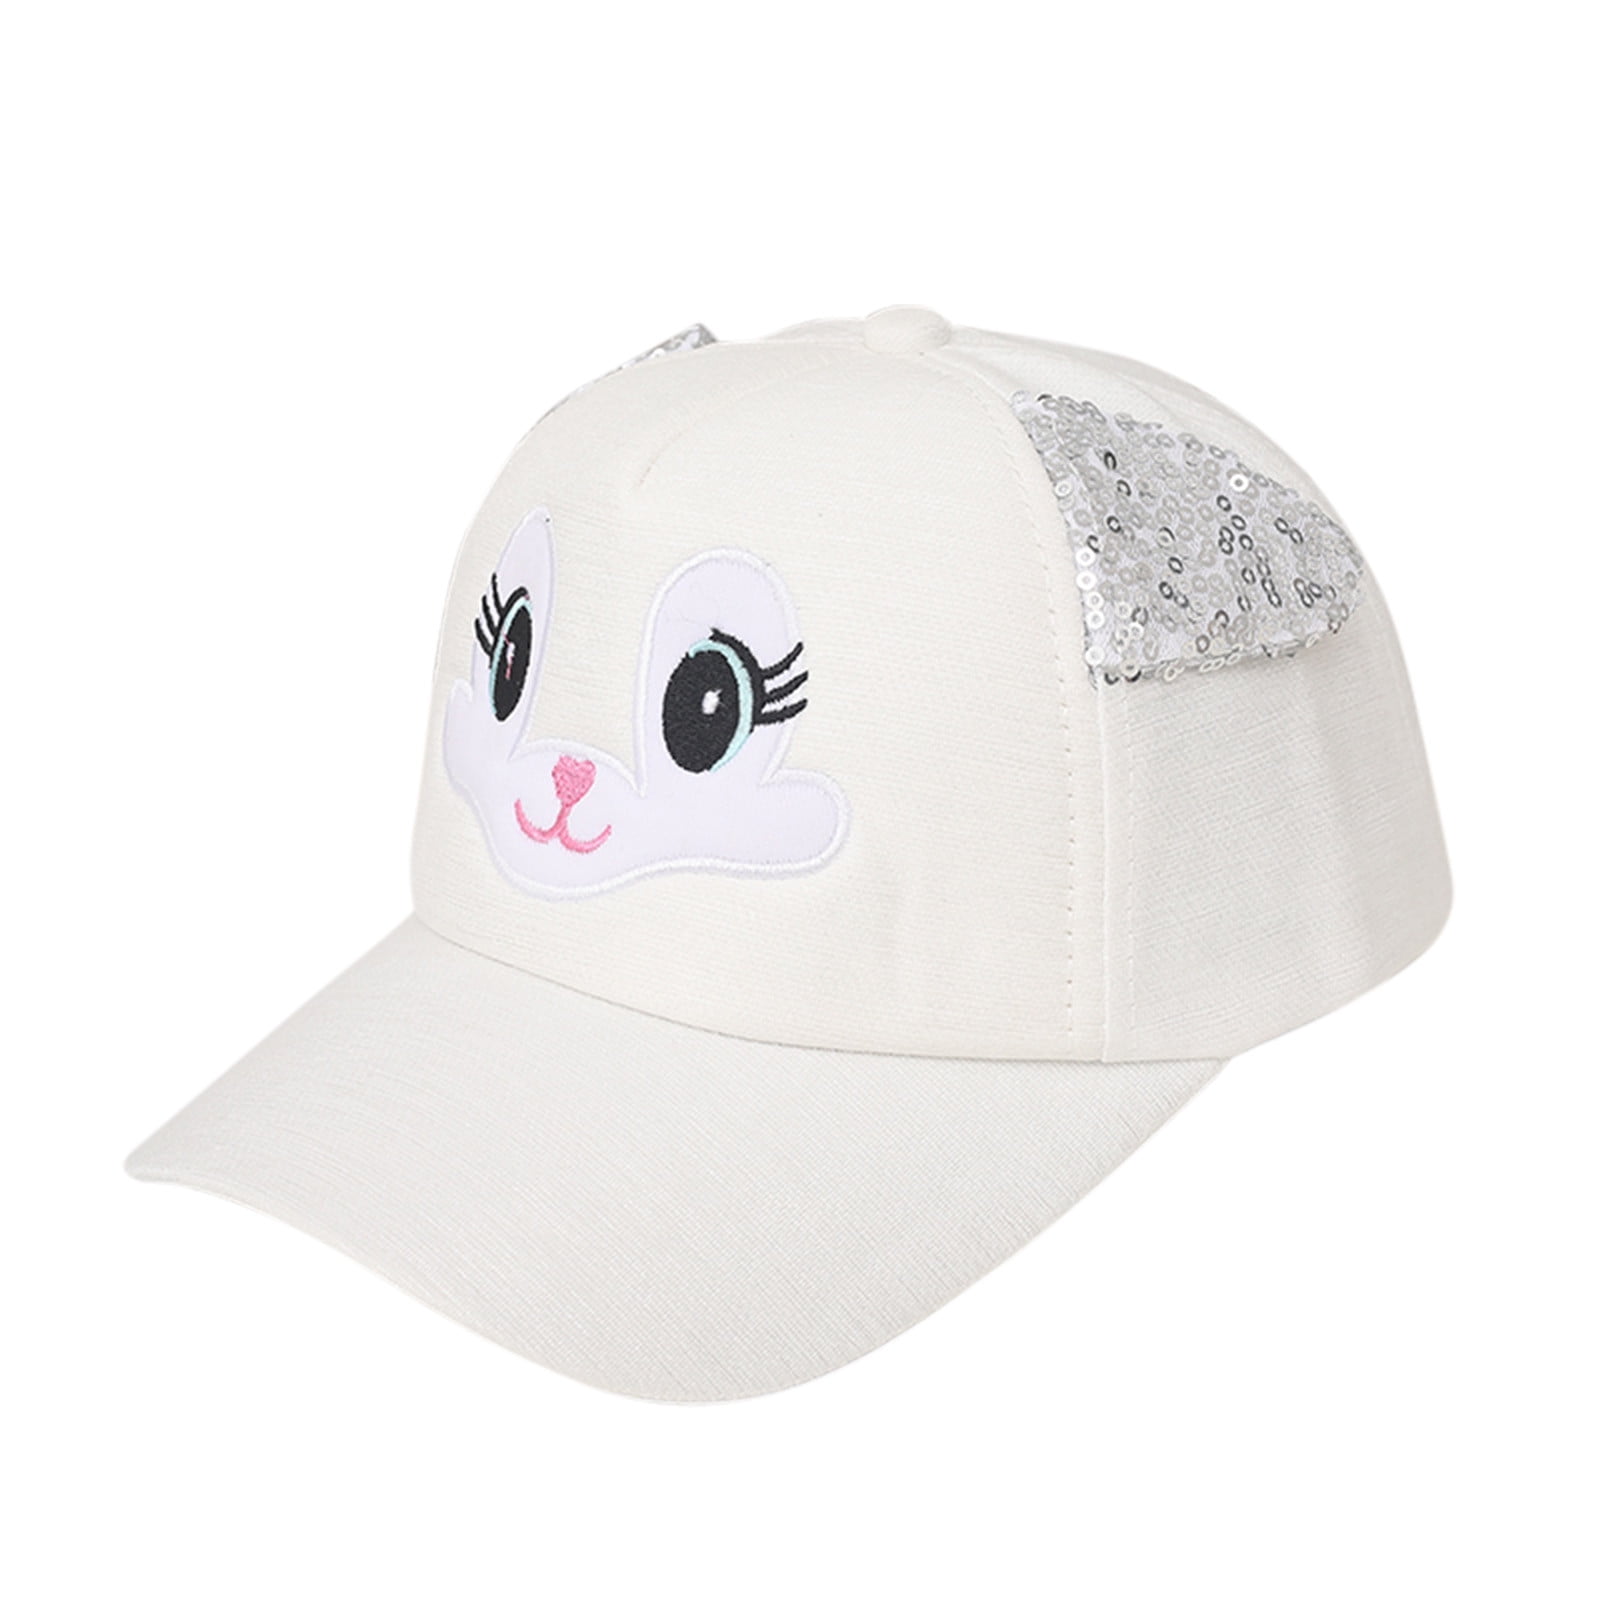 Boys Girls PKSFFO Cool Cartoon Baseball Cap Adjustable Lightweight Hat Breathable Sunhat for Kids Youth 